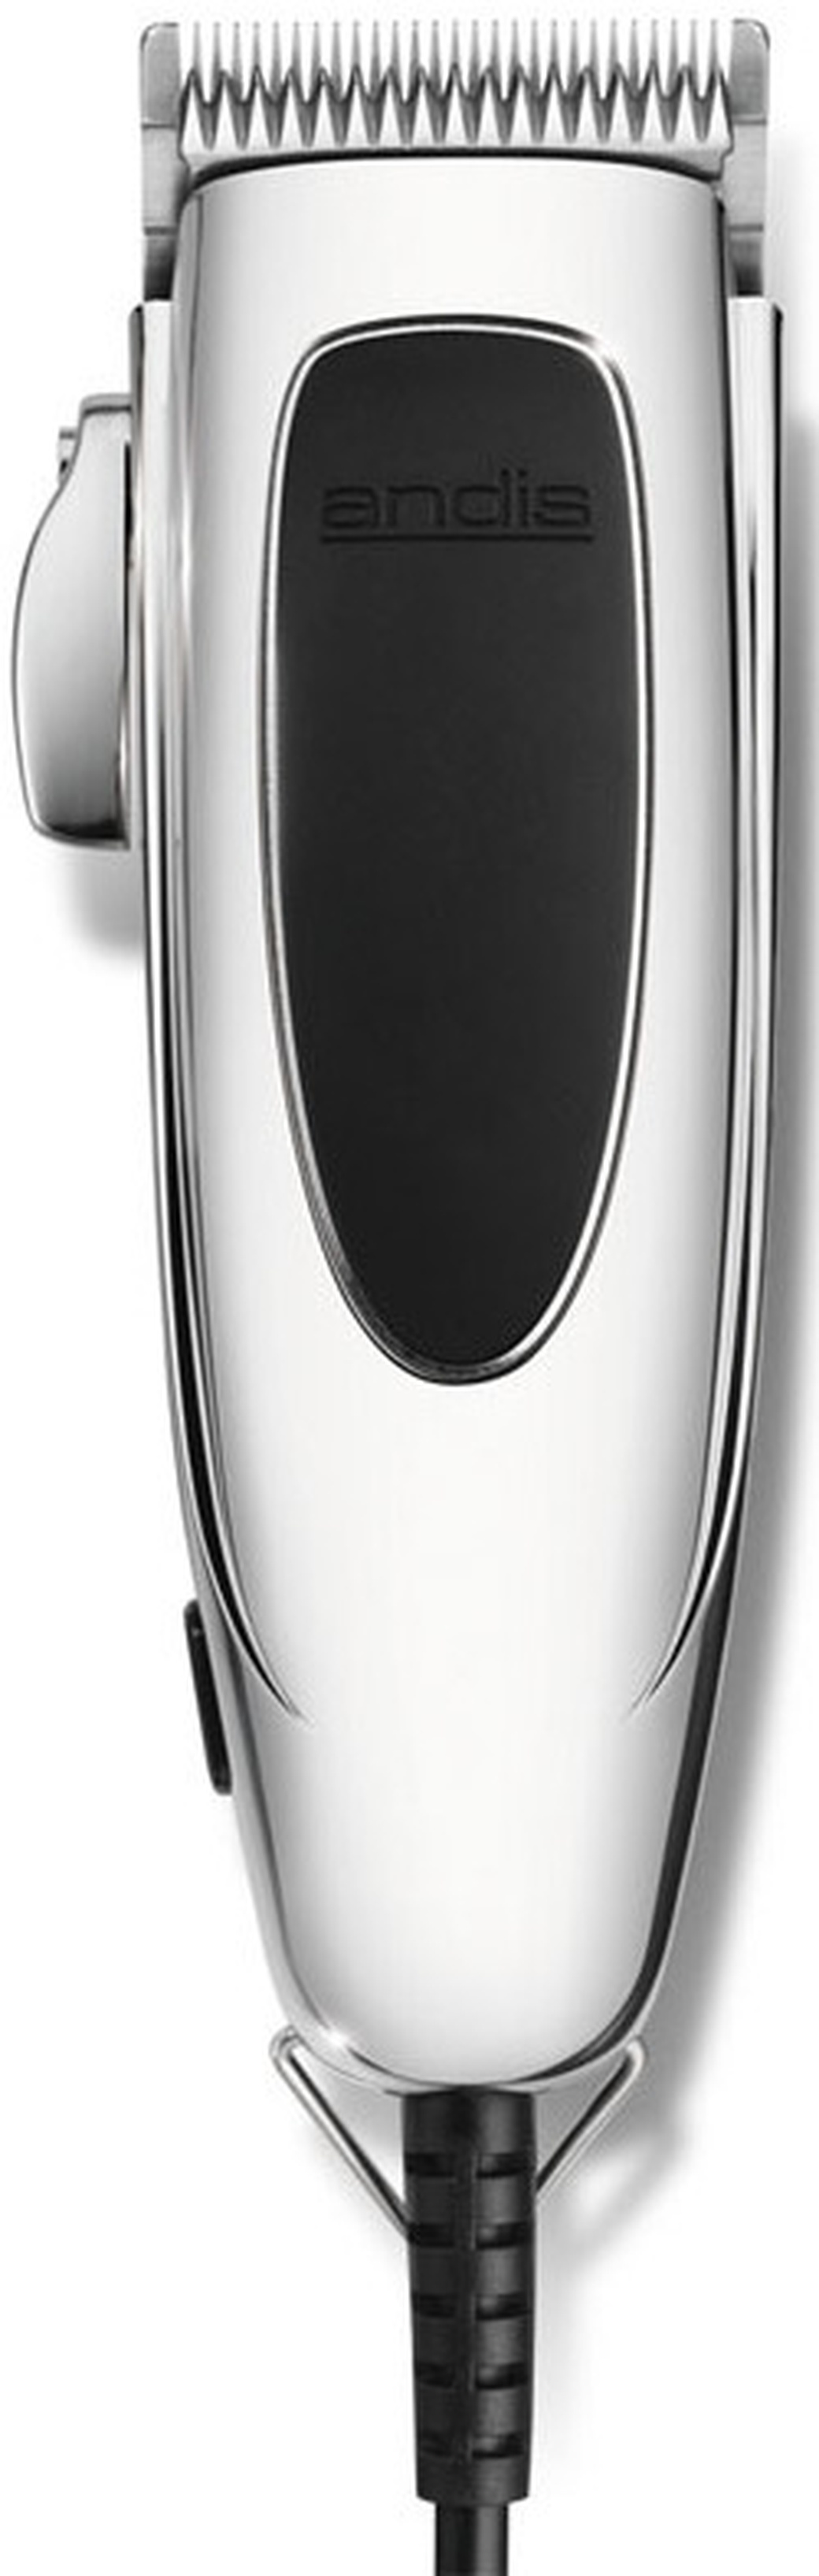 Машинка для стрижки Andis PM-4 Trendsetter, сетевая,15 Вт, 9 насадок, серебристая фото